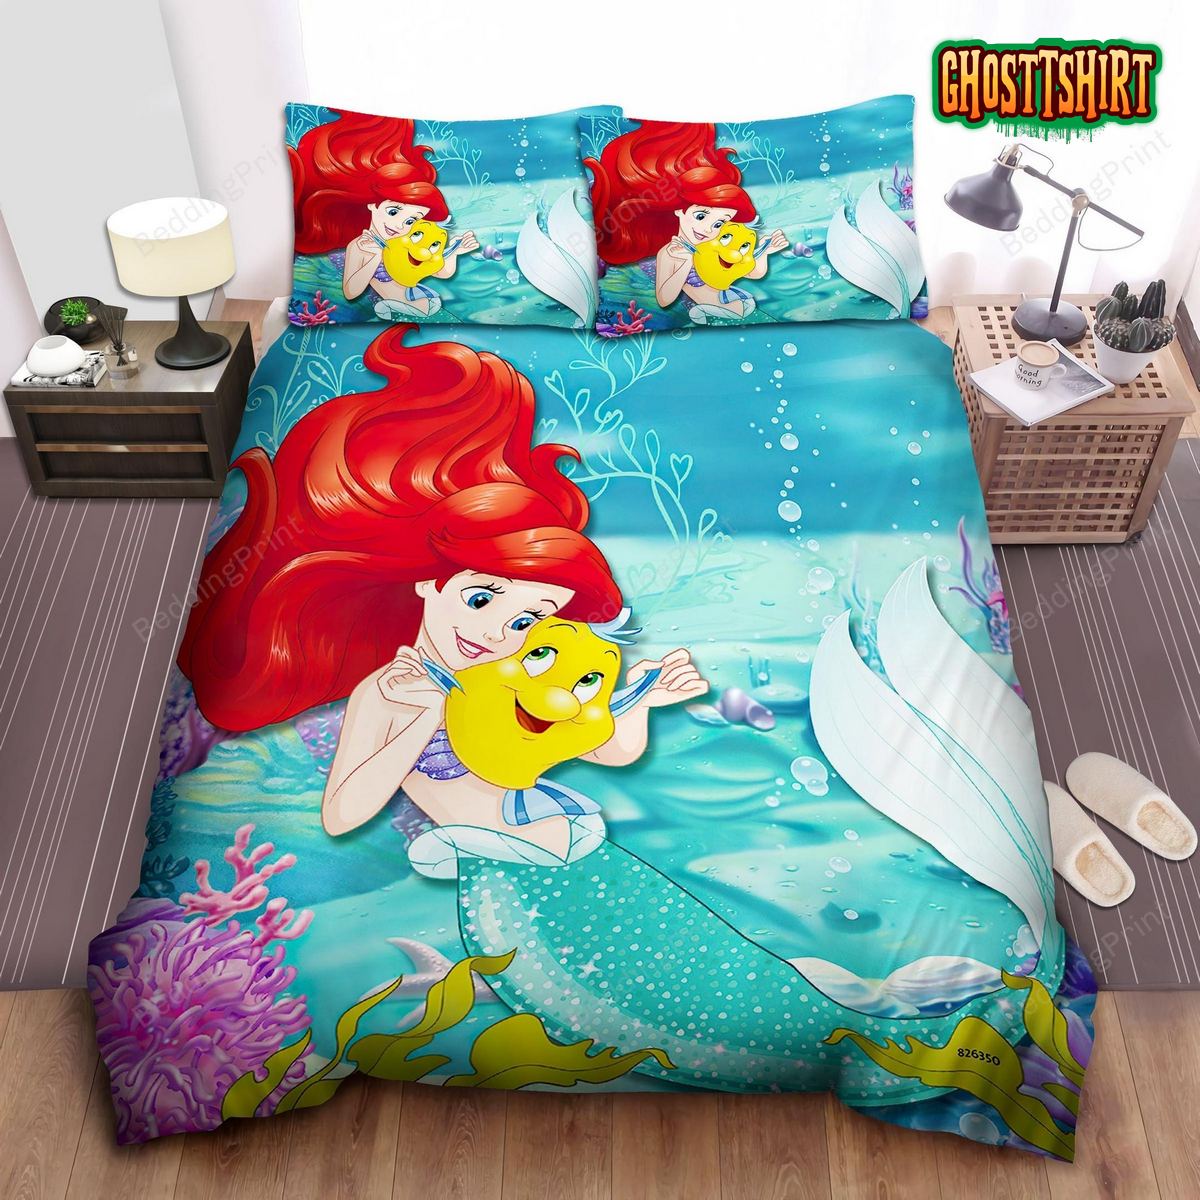 Disney Princess With Her Friend Flounder Bed Sheet Cover Bedding Set